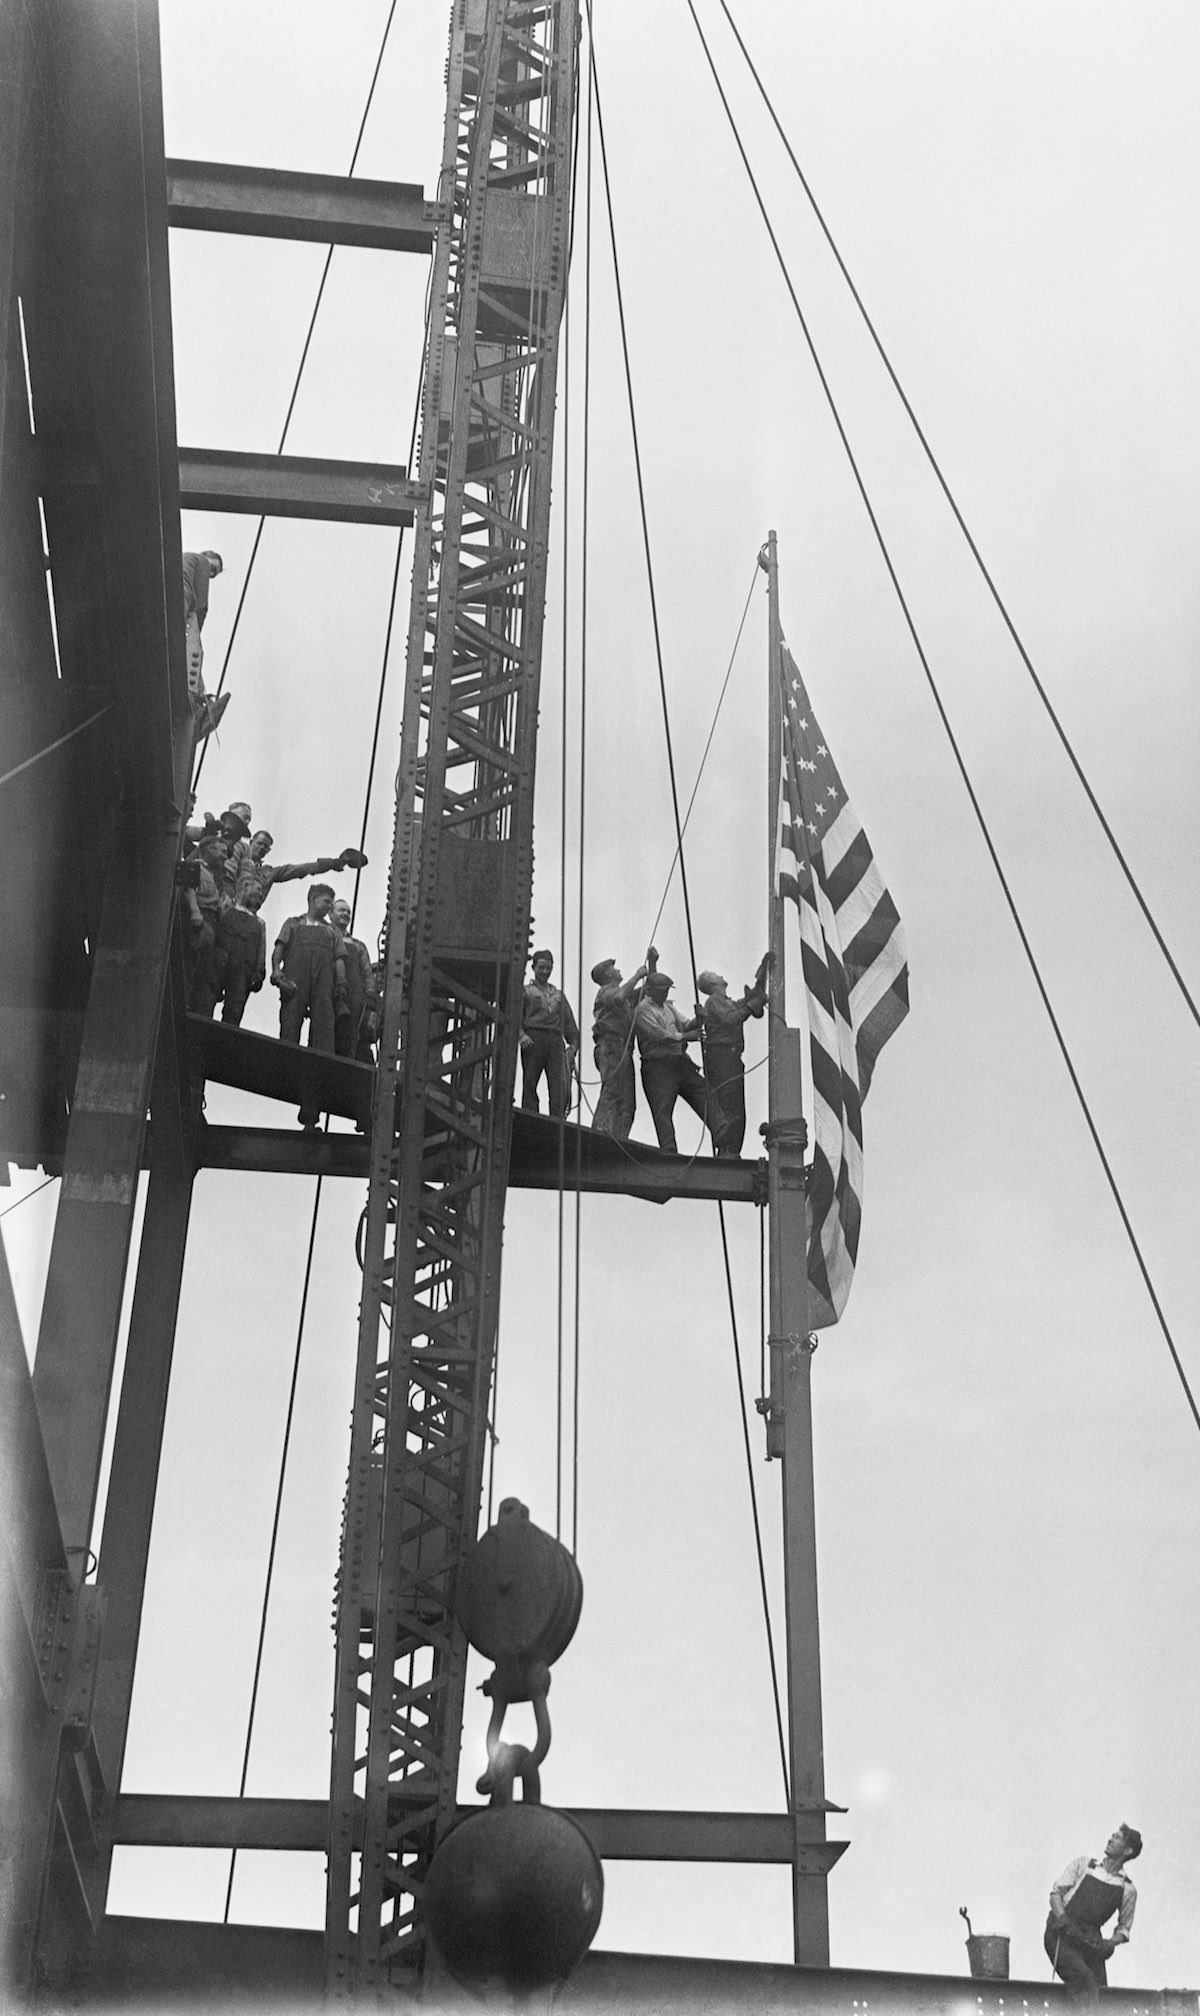 1934 ACROBAT DAREDEVIL STUNT EMPIRE STATE BUILDING PHOTO NEW YORK CITY SKYLINE 